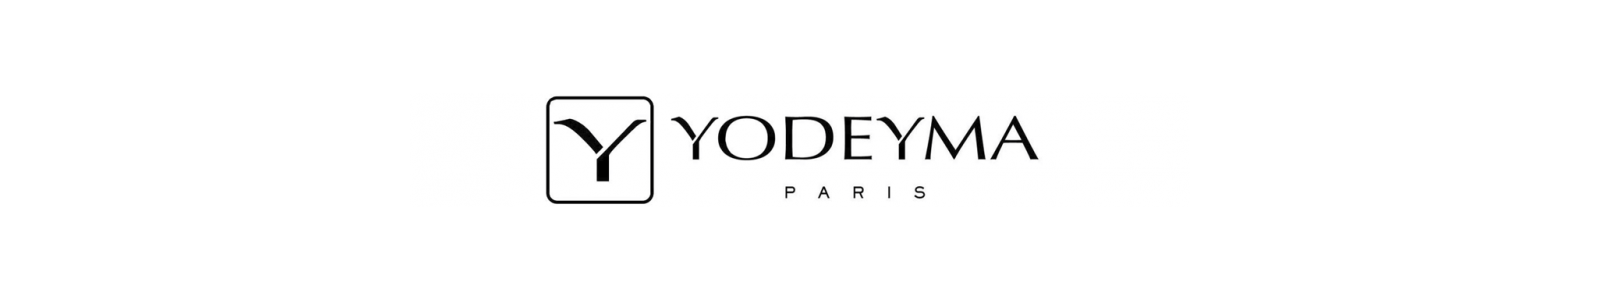 yodeyma logo